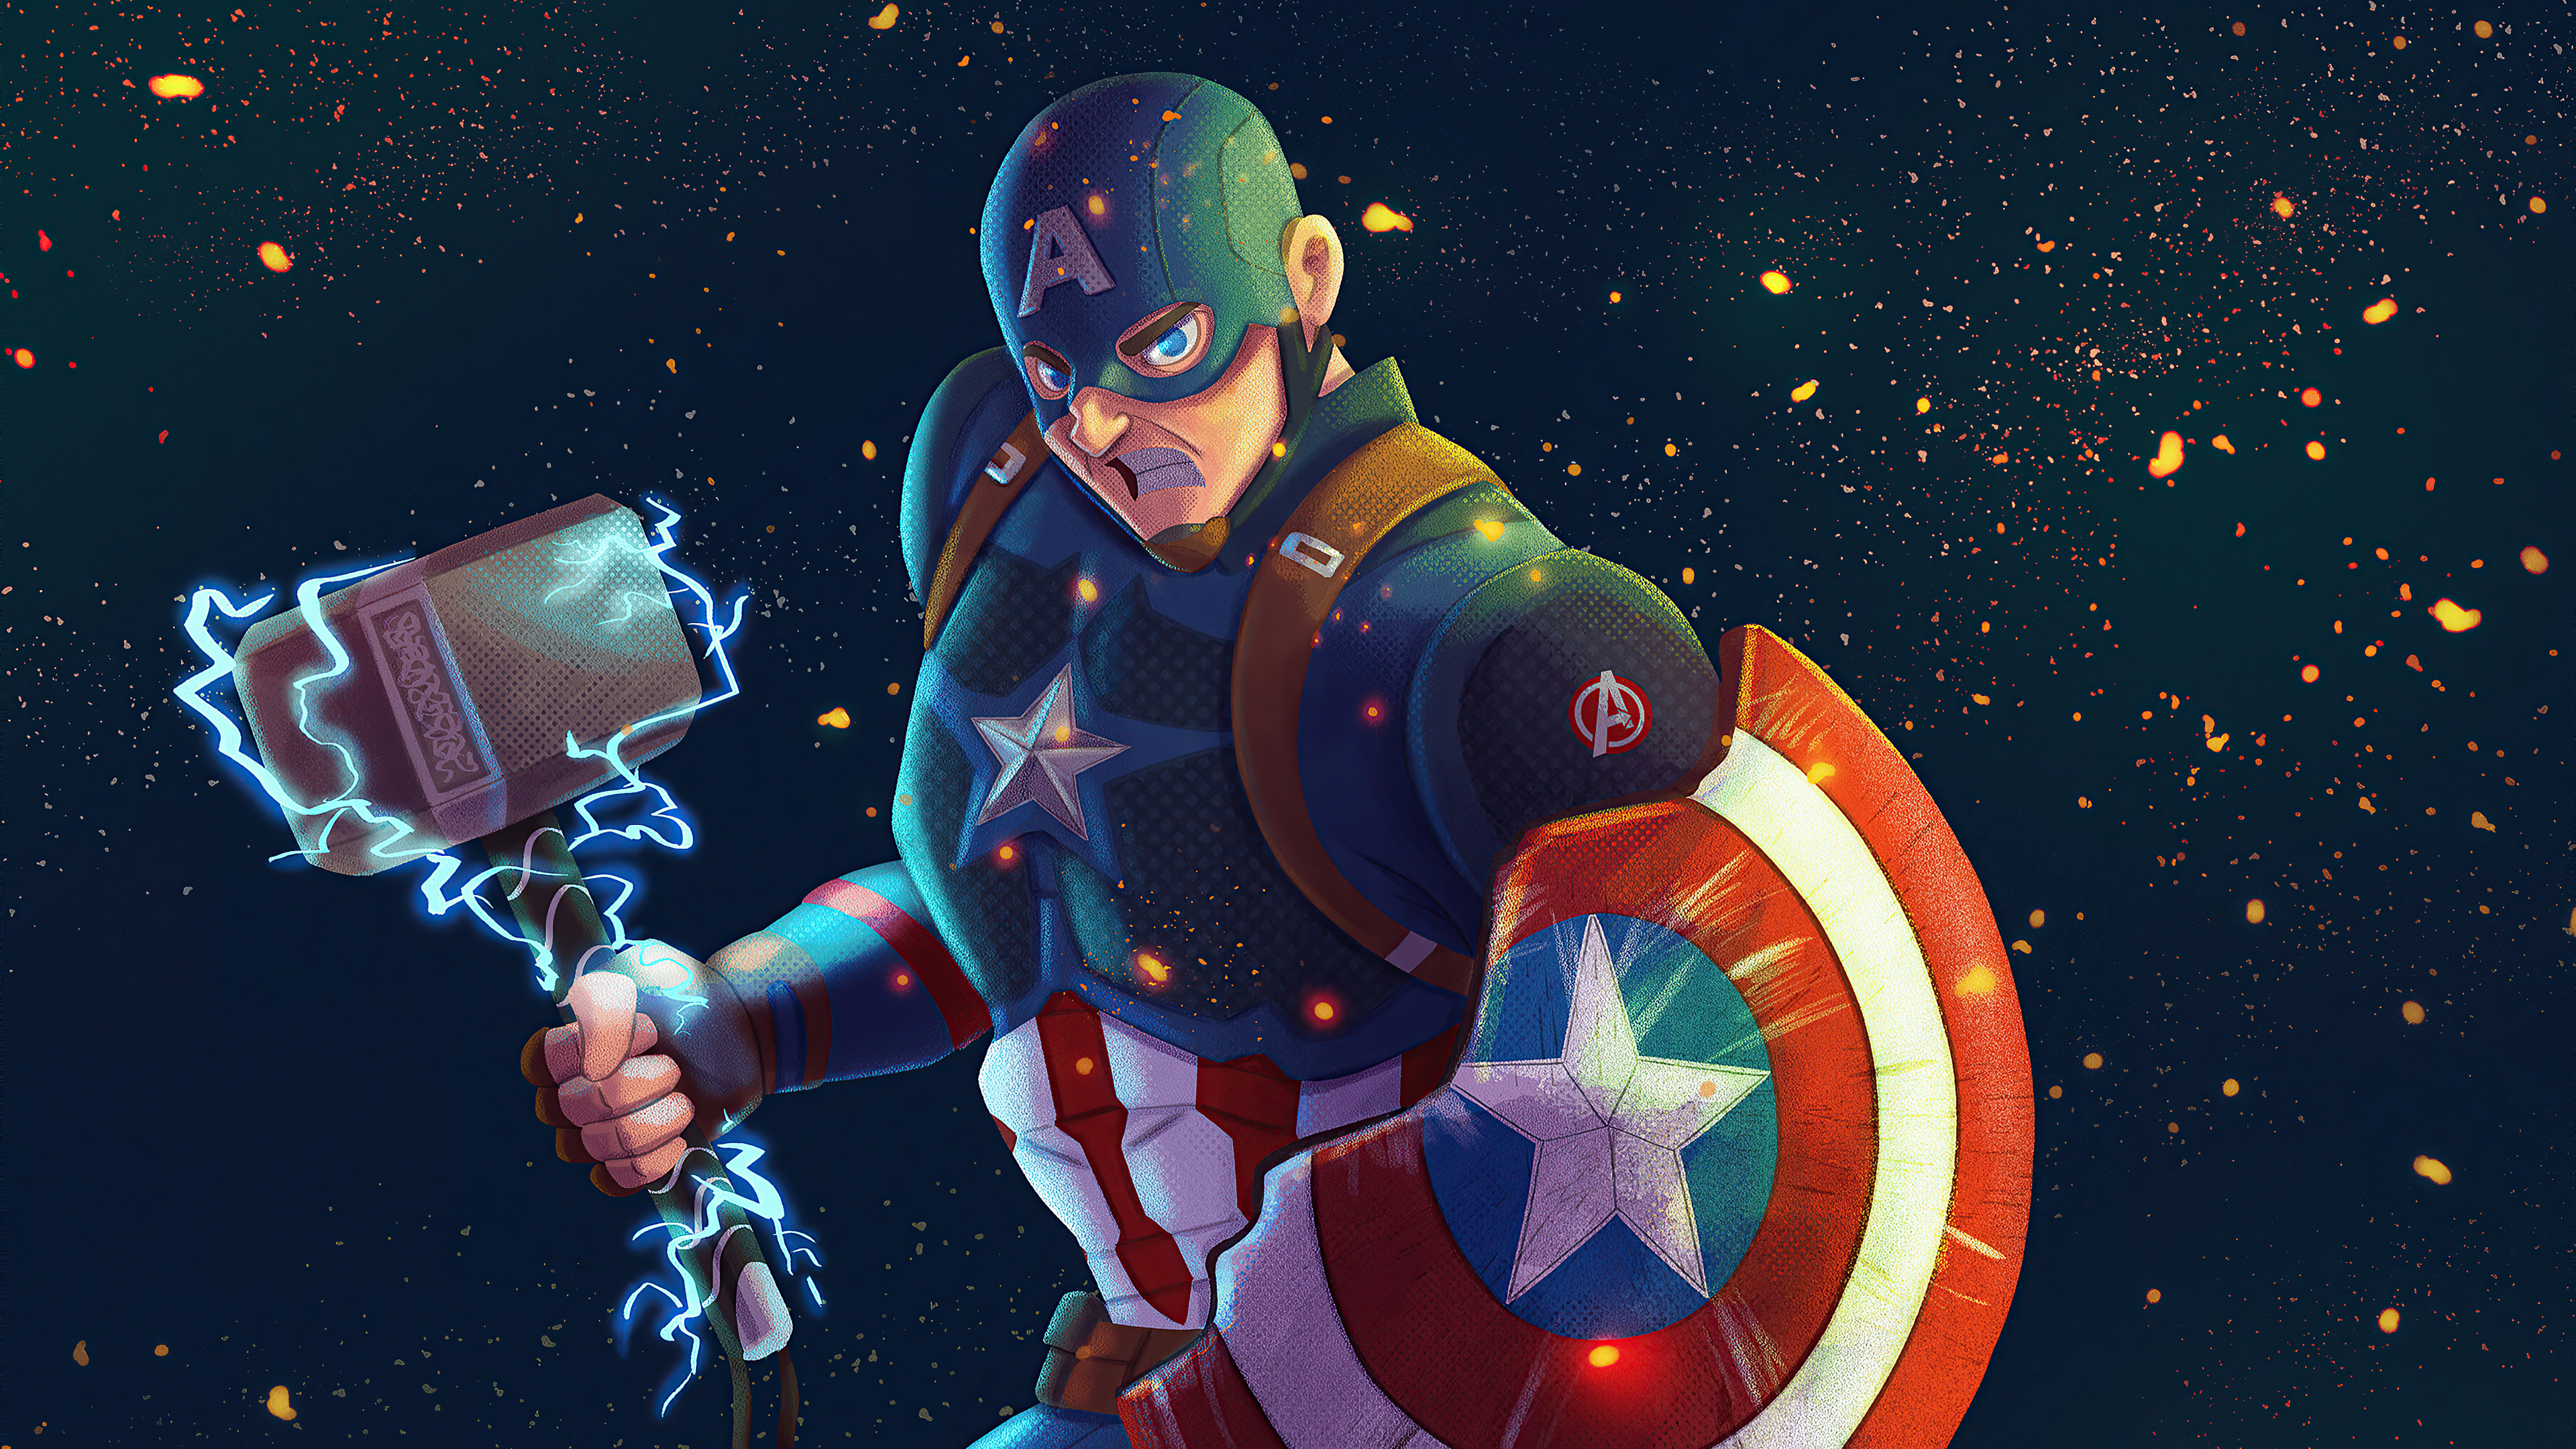 Captain America 4k Ultra HD Wallpaper by Rafael Andrade